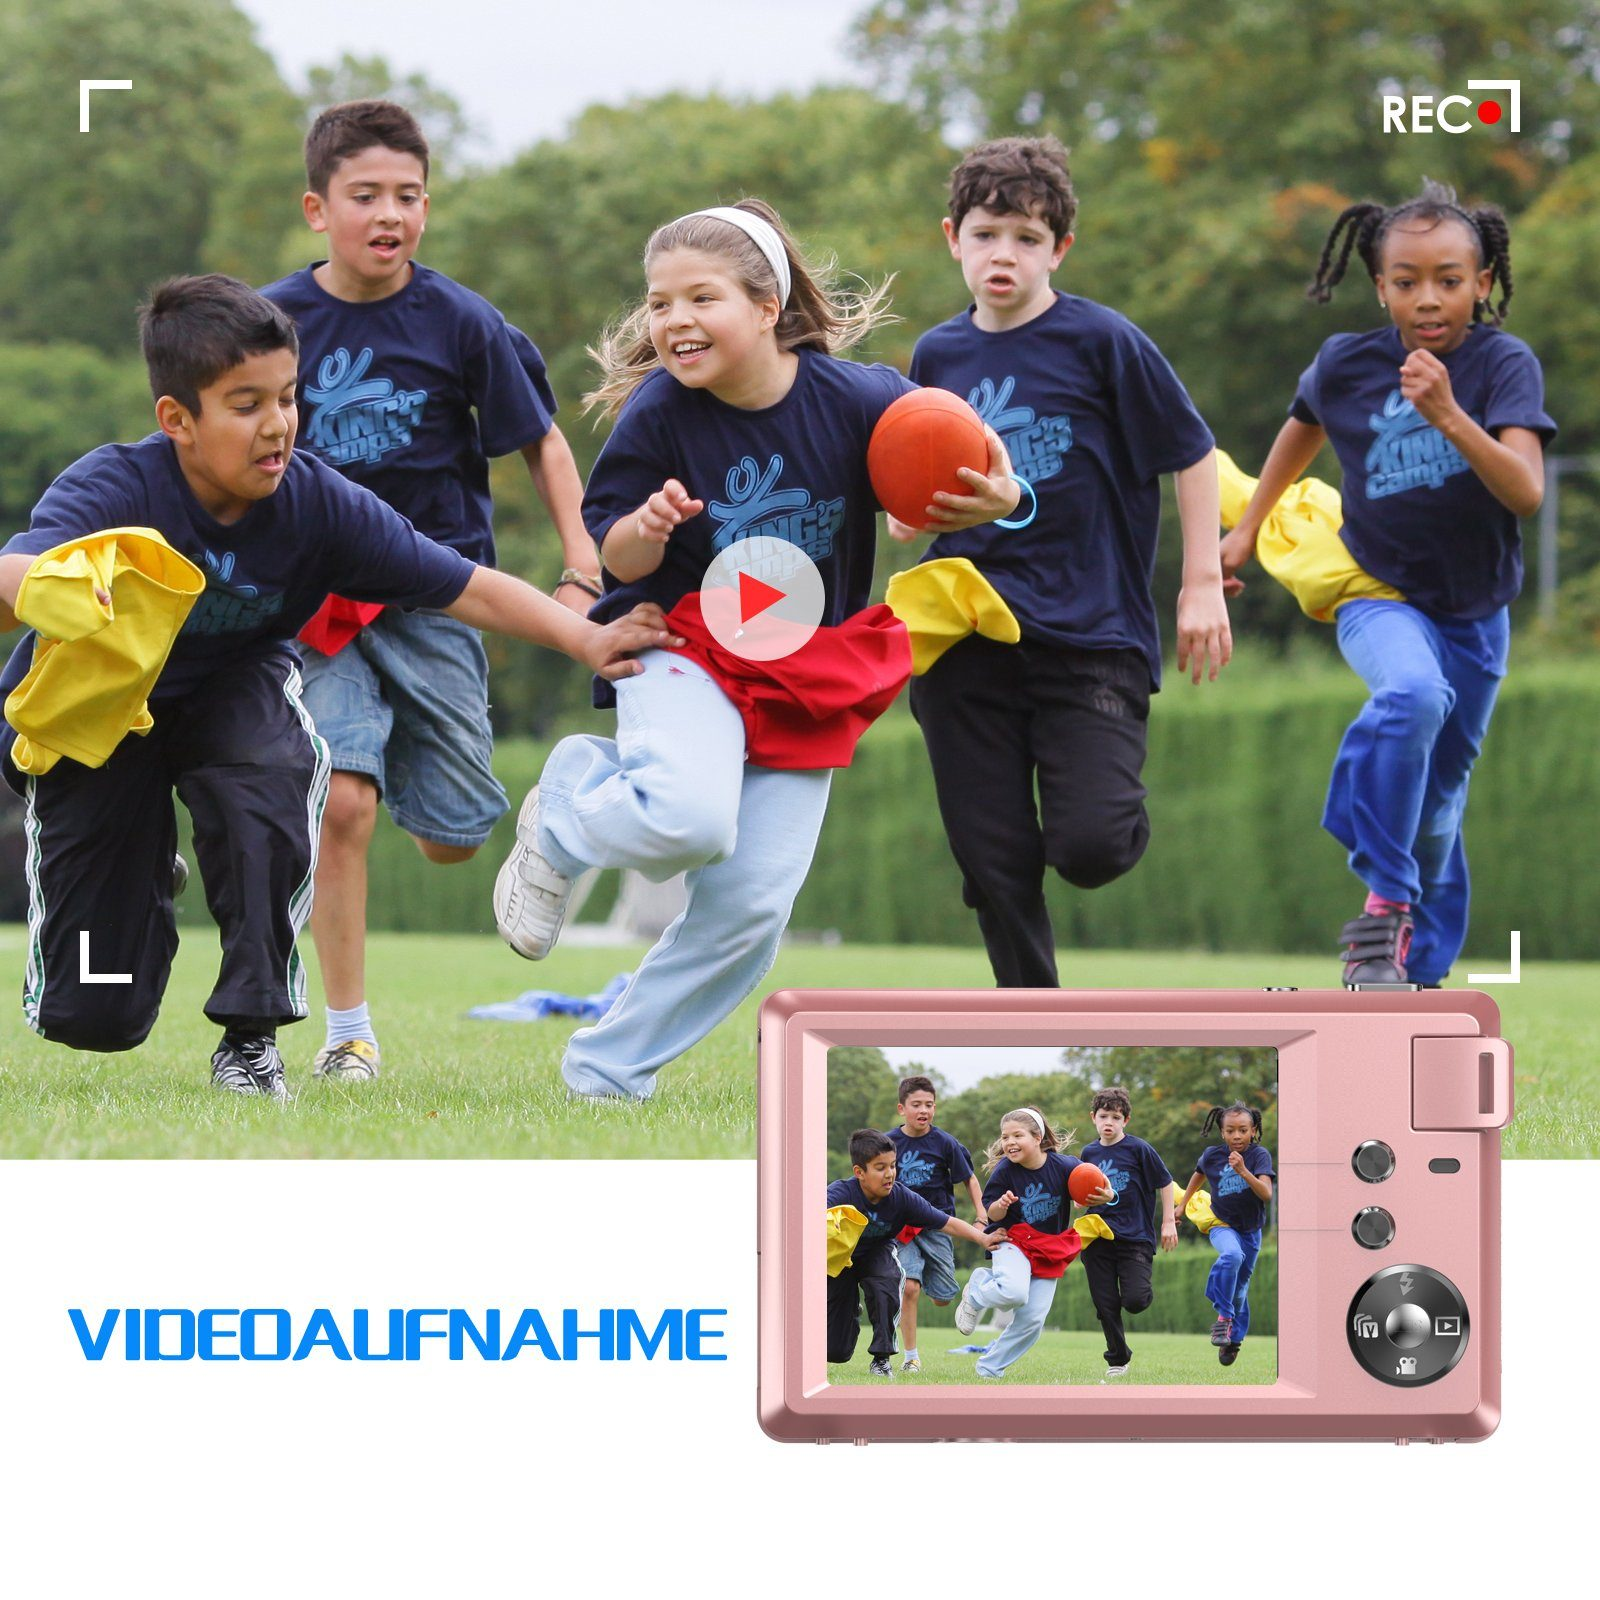 rosa FINE 48-Megapixel-Sensor 4K-Video und LIFE Digitalzoom, 16-facher Kompaktkamera PRO